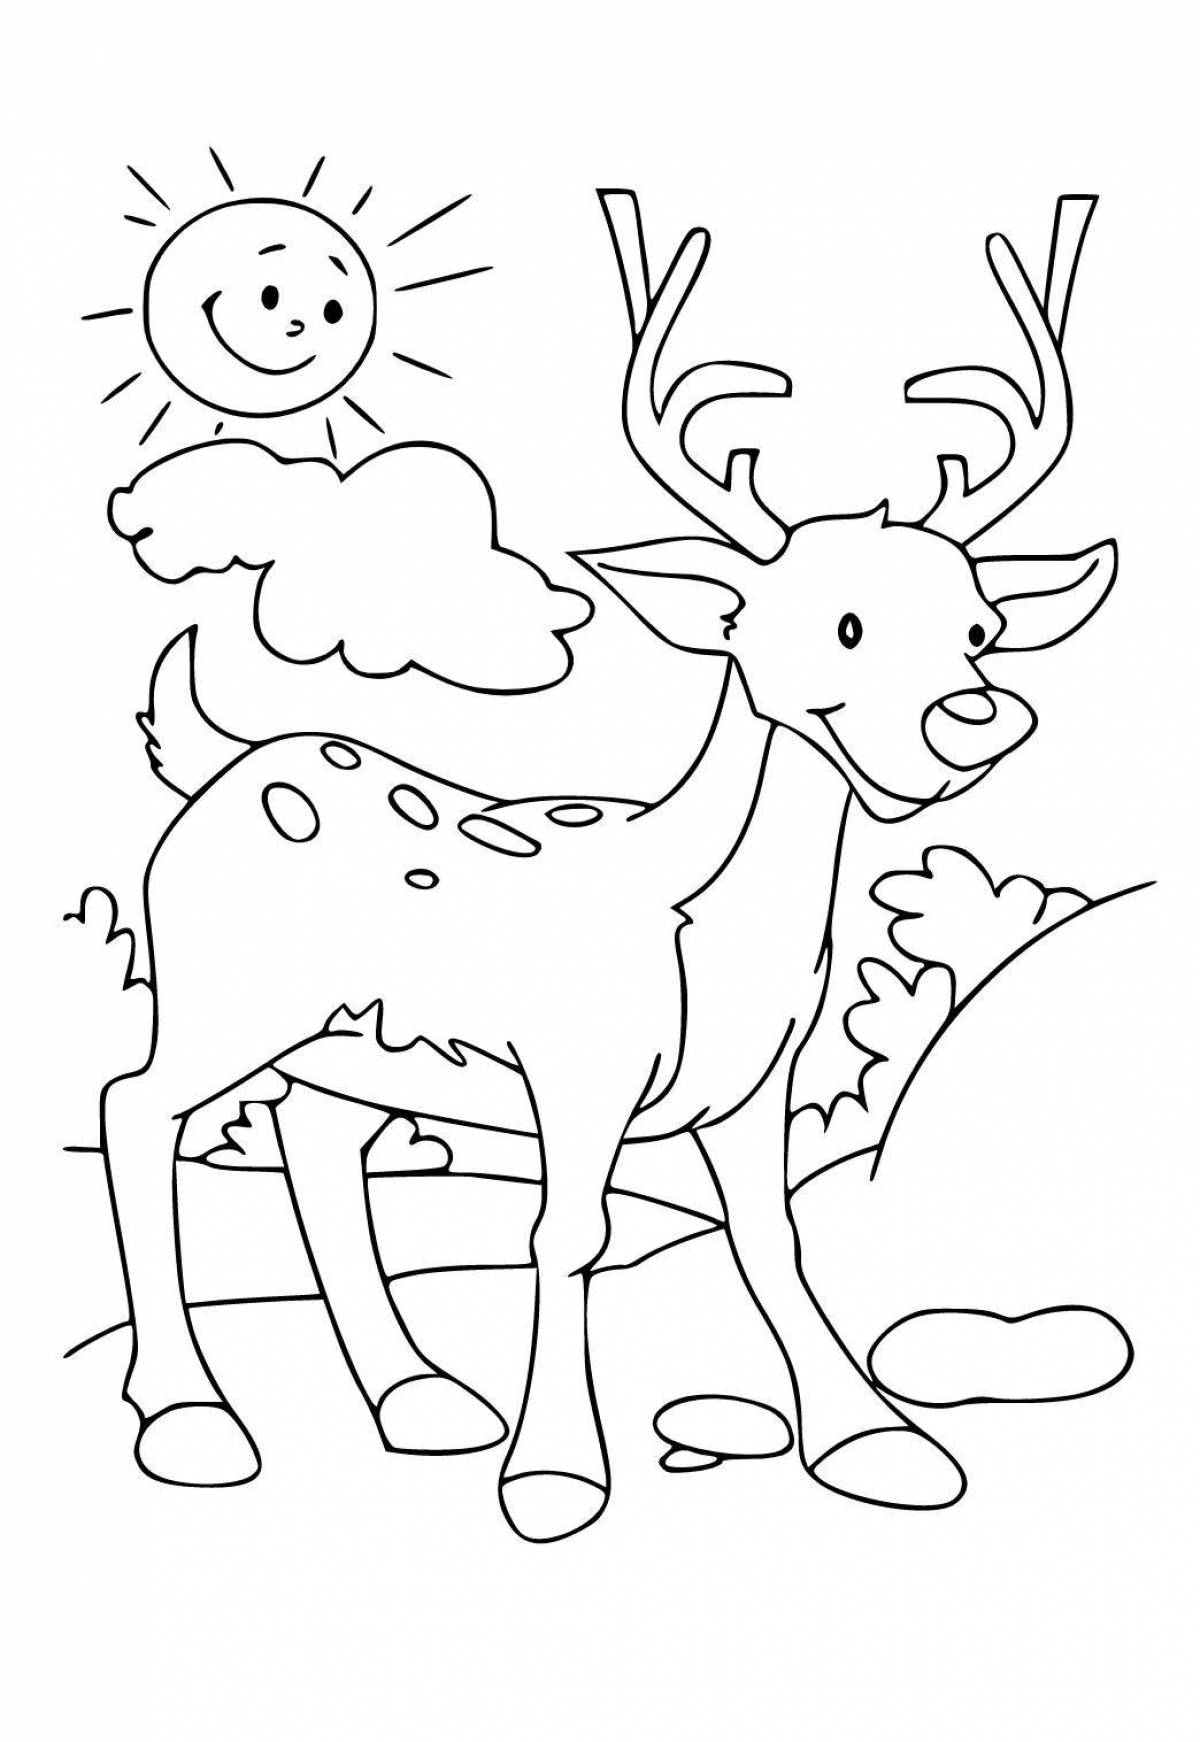 Fantastic deer coloring book for 3-4 year olds